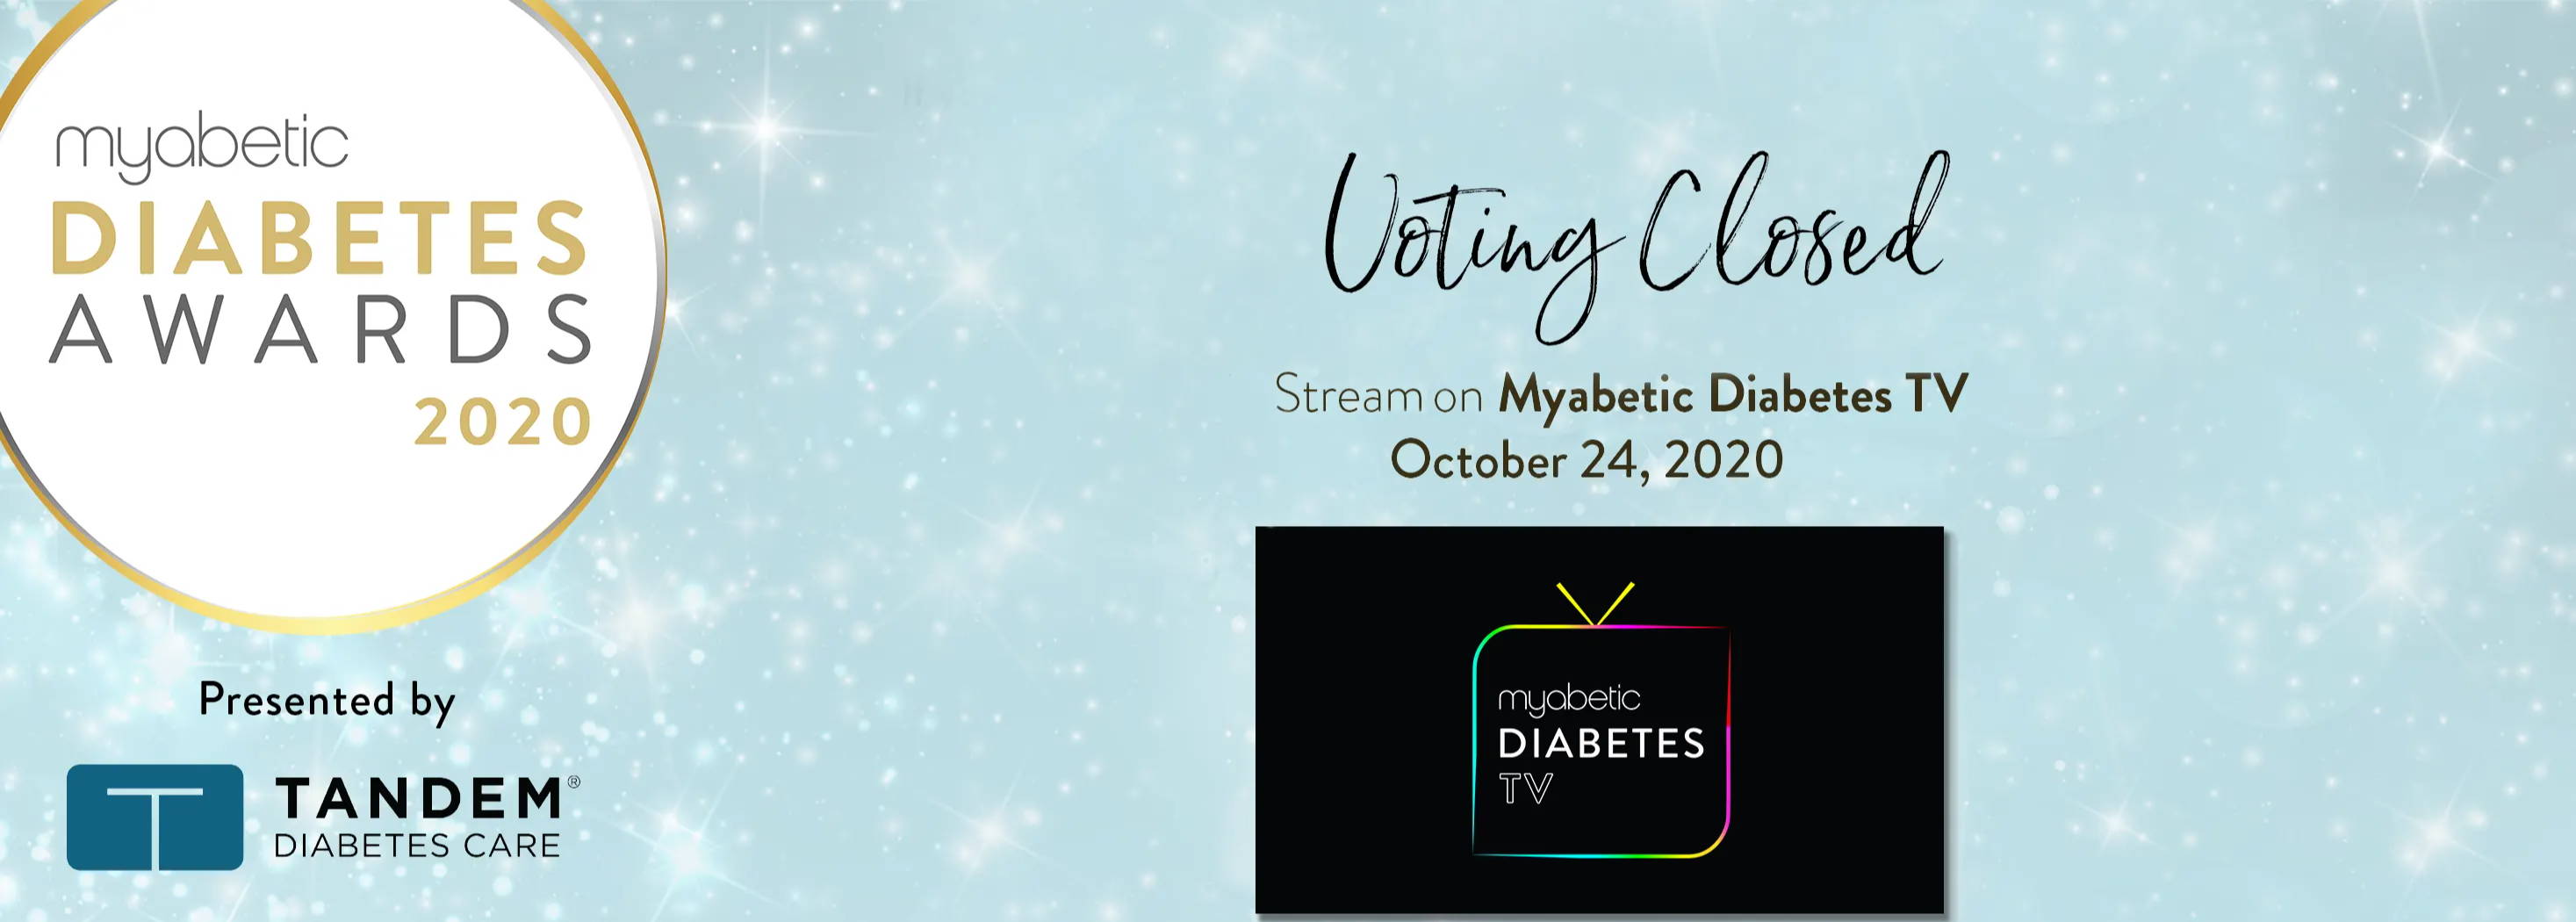 diabetes-awards-voting-closed